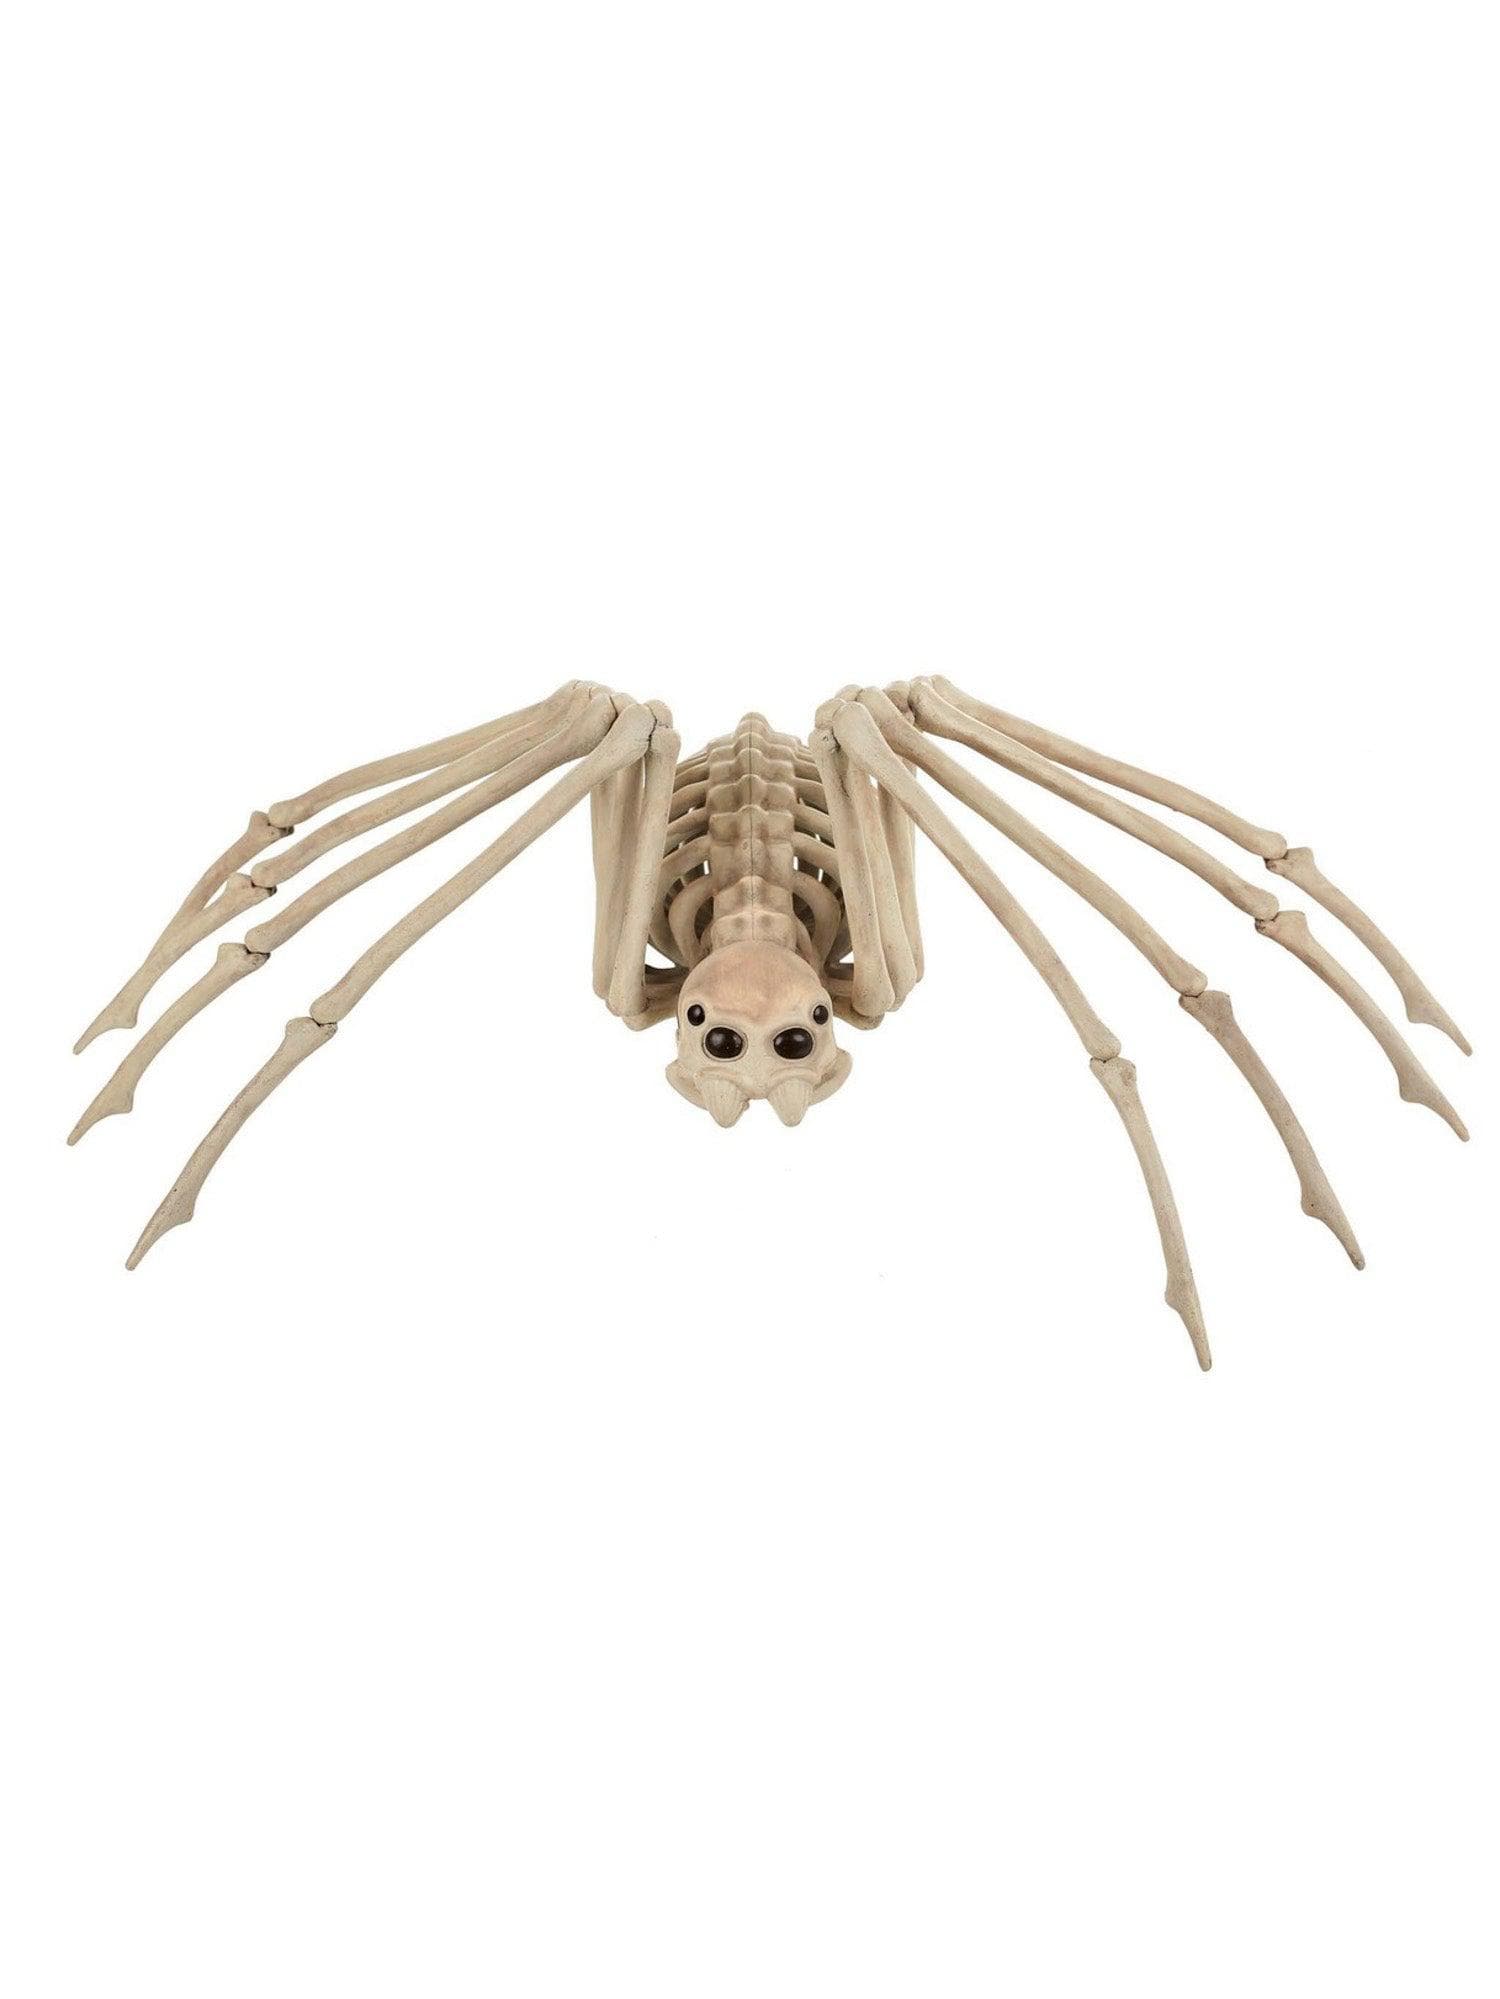 20.5 Inch Spider Skeleton Prop - costumes.com